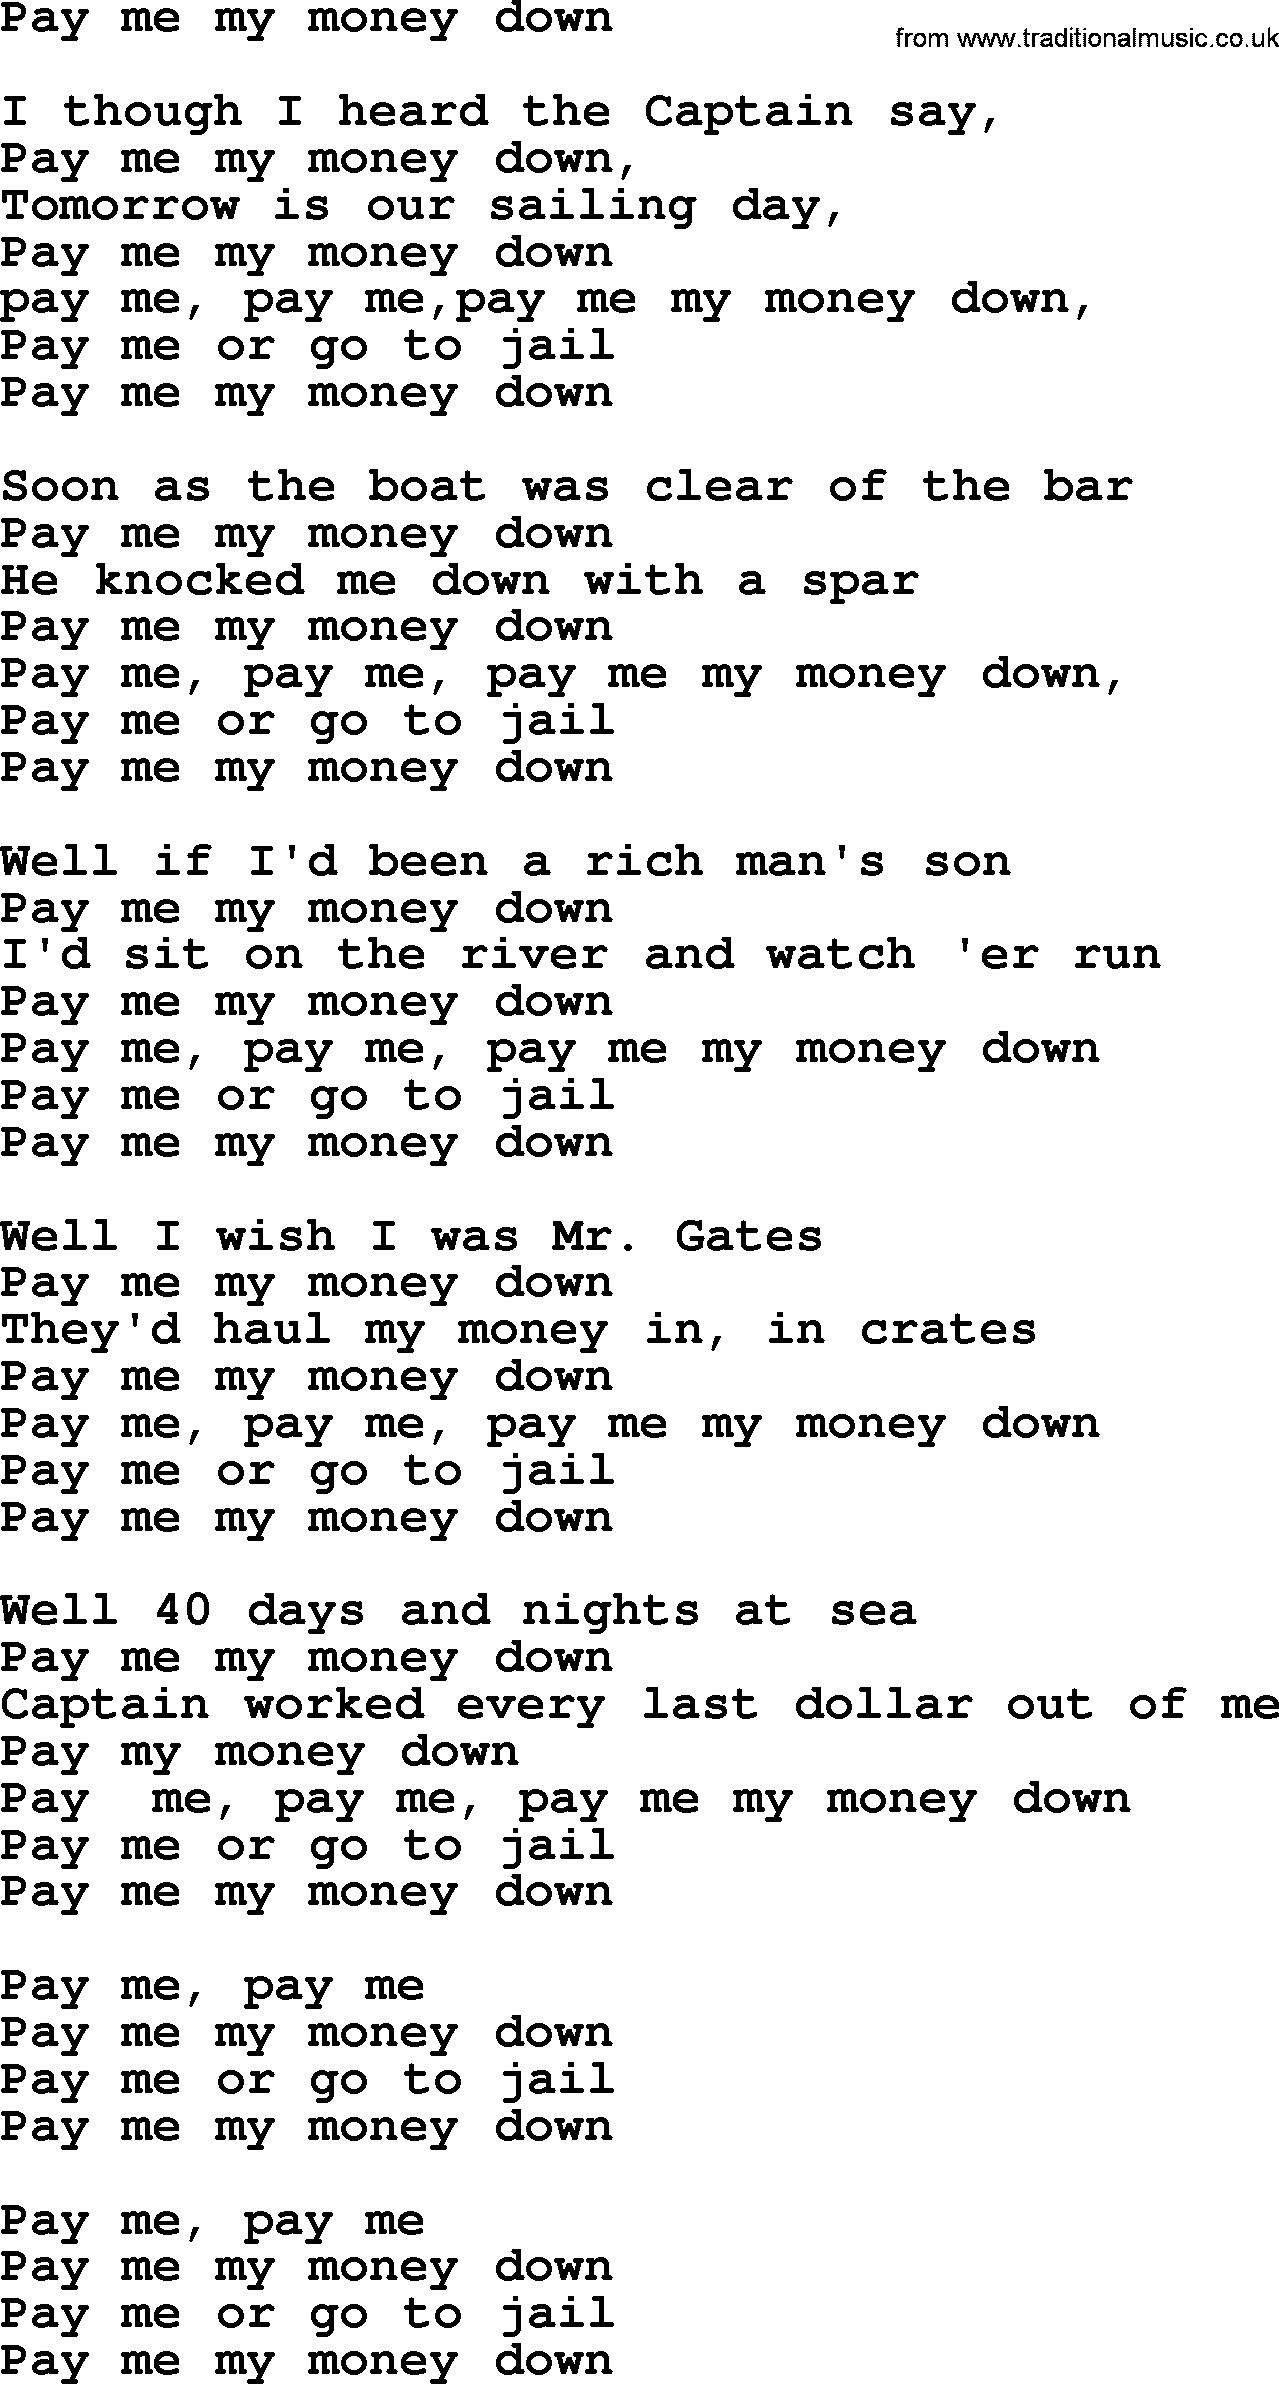 Bruce Springsteen song: Pay Me My Money Down lyrics